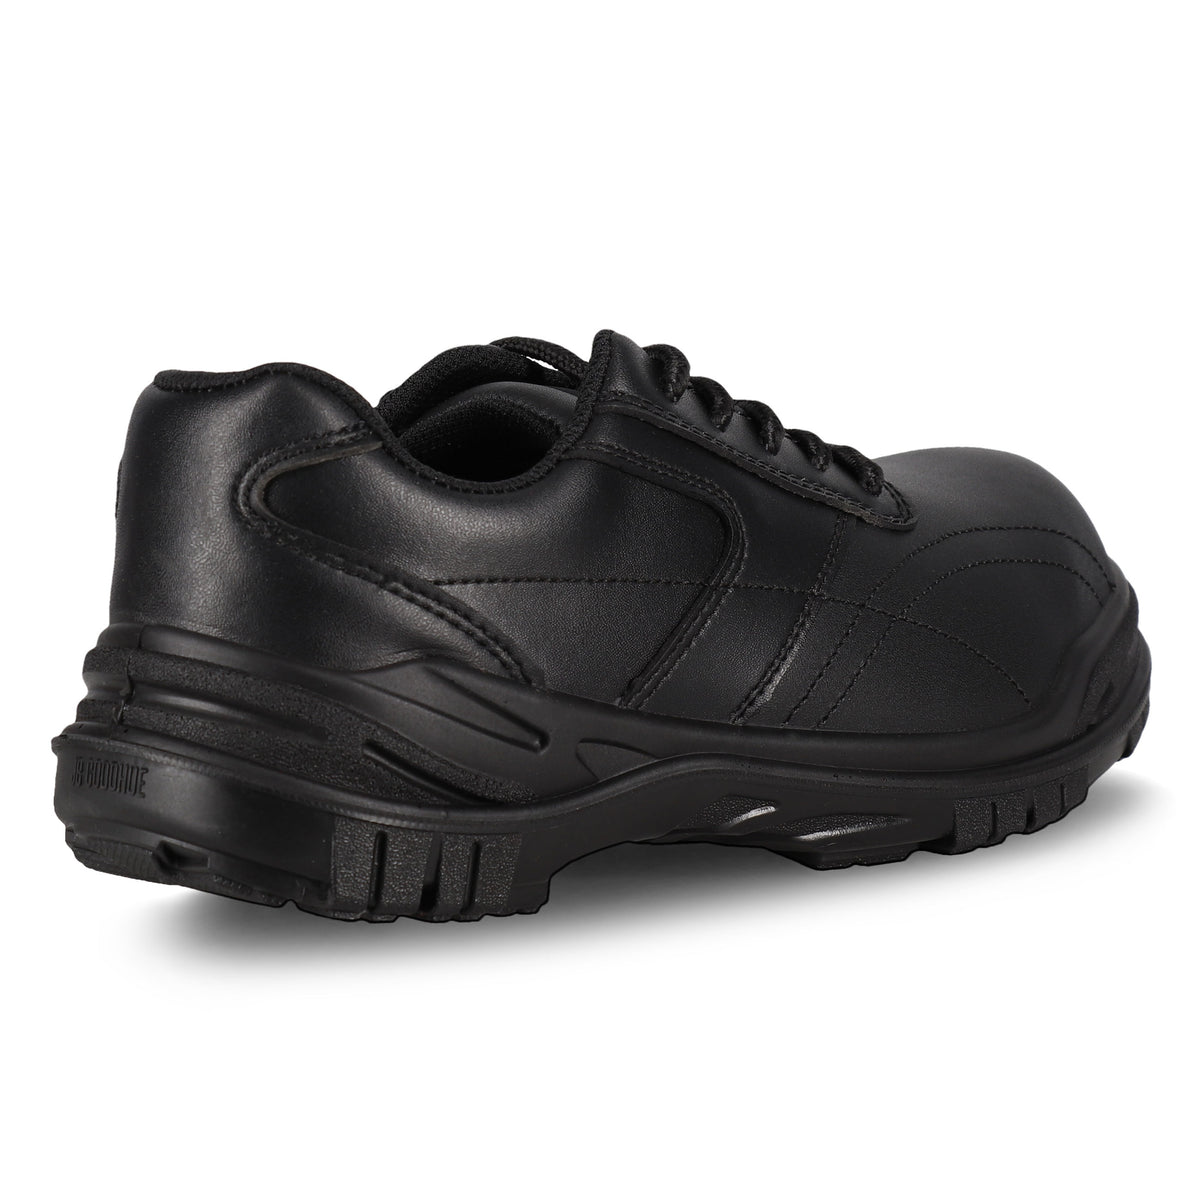 Jb Goodhue Comrade 20200 Black Shoes